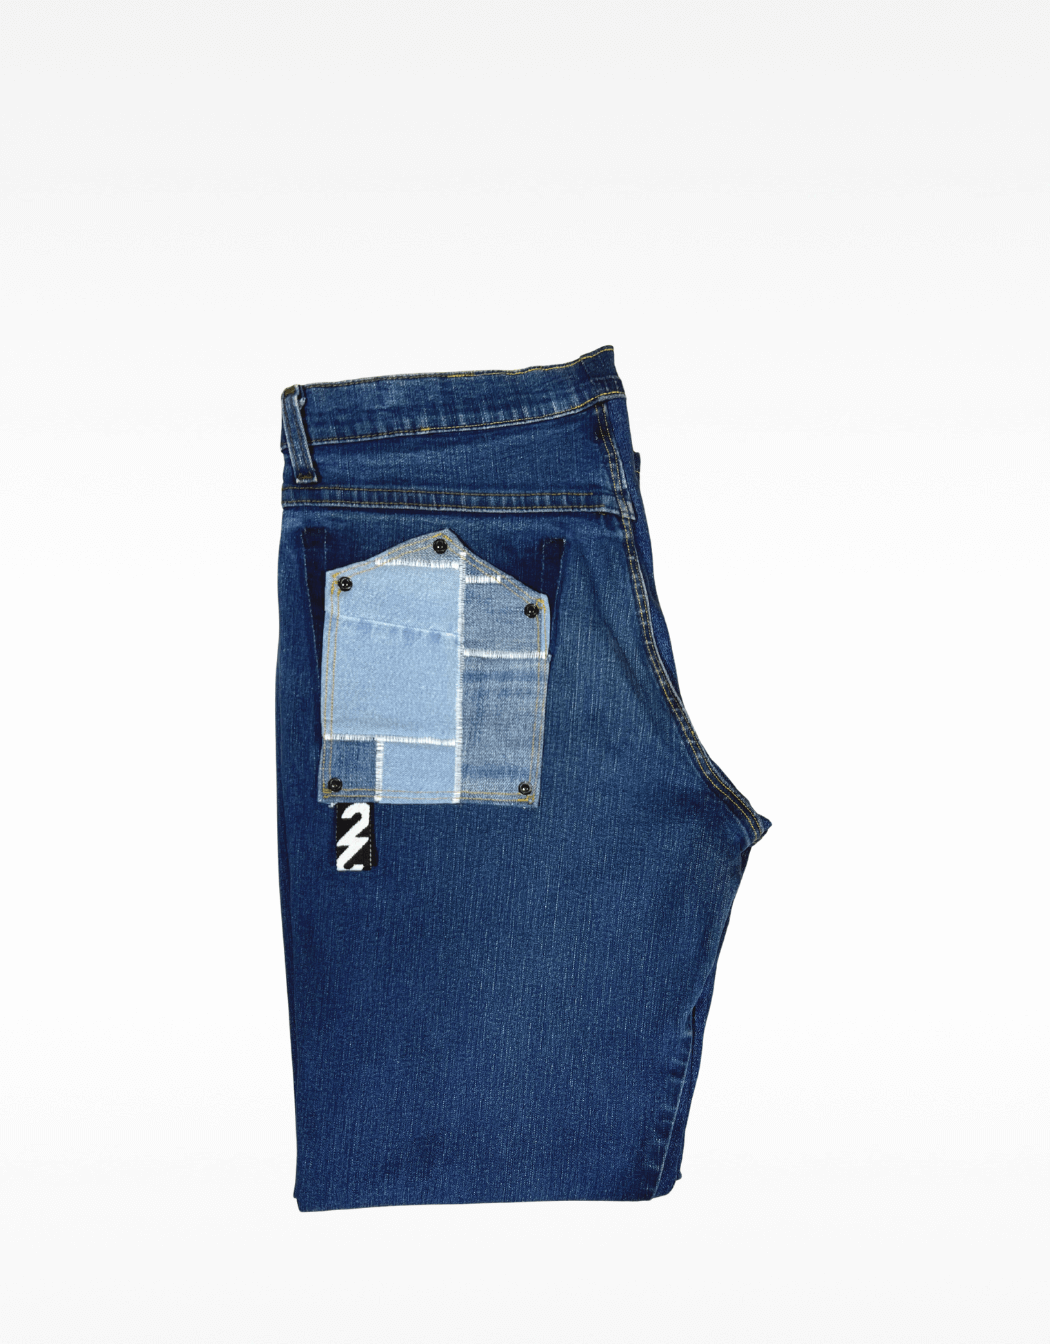 jeans-rework-upcycling-2ndechance-patchworks-artisanat-madeindijon-dos-plie-2C